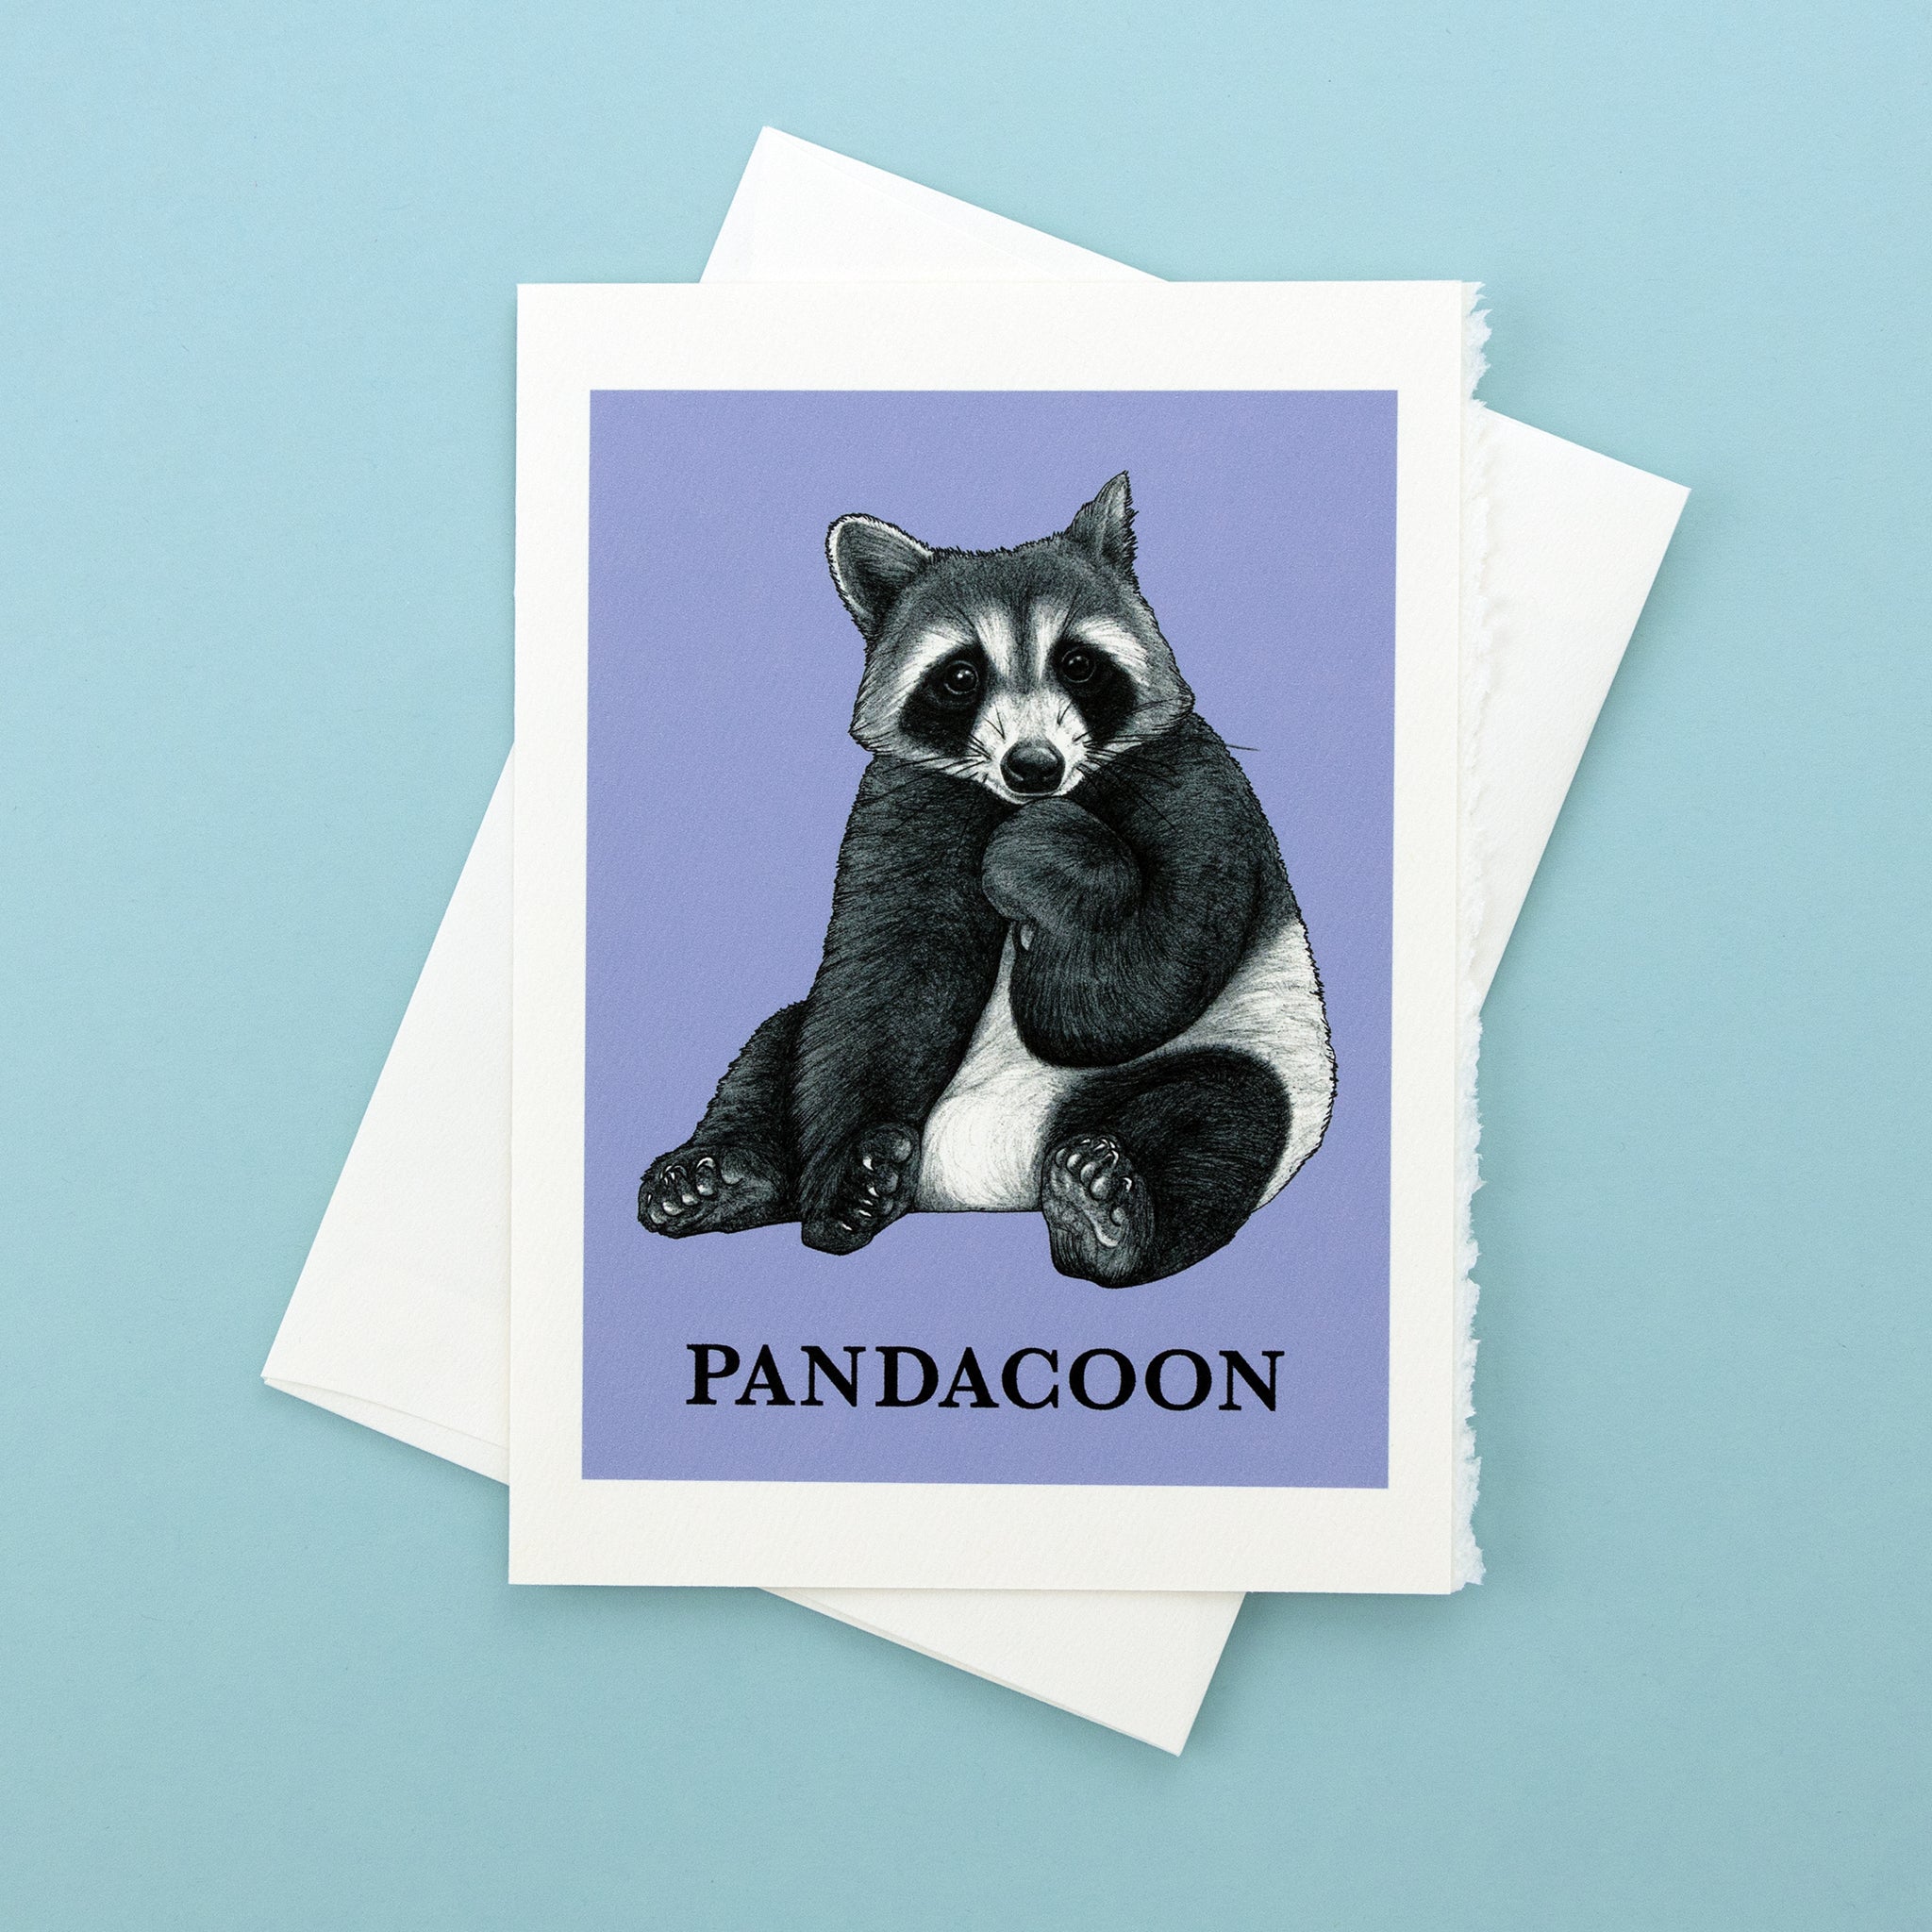 Pandacoon 5x7" Greeting Card